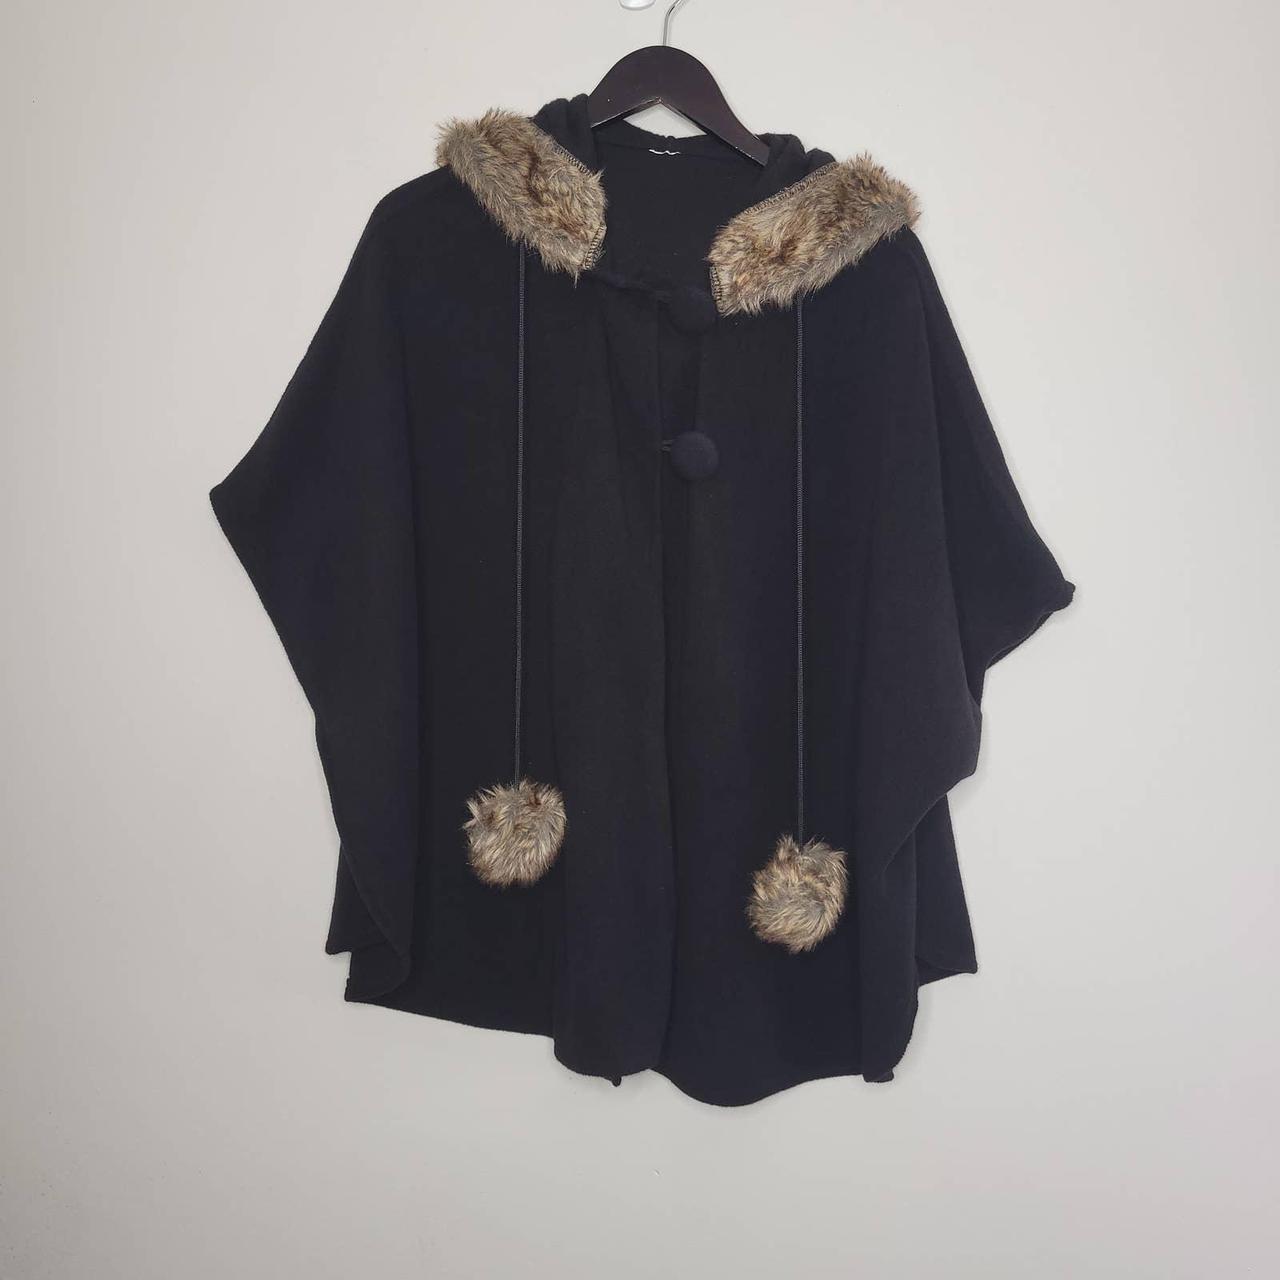 Faux Fur Hooded Fleece Cape Black Condition: No... - Depop